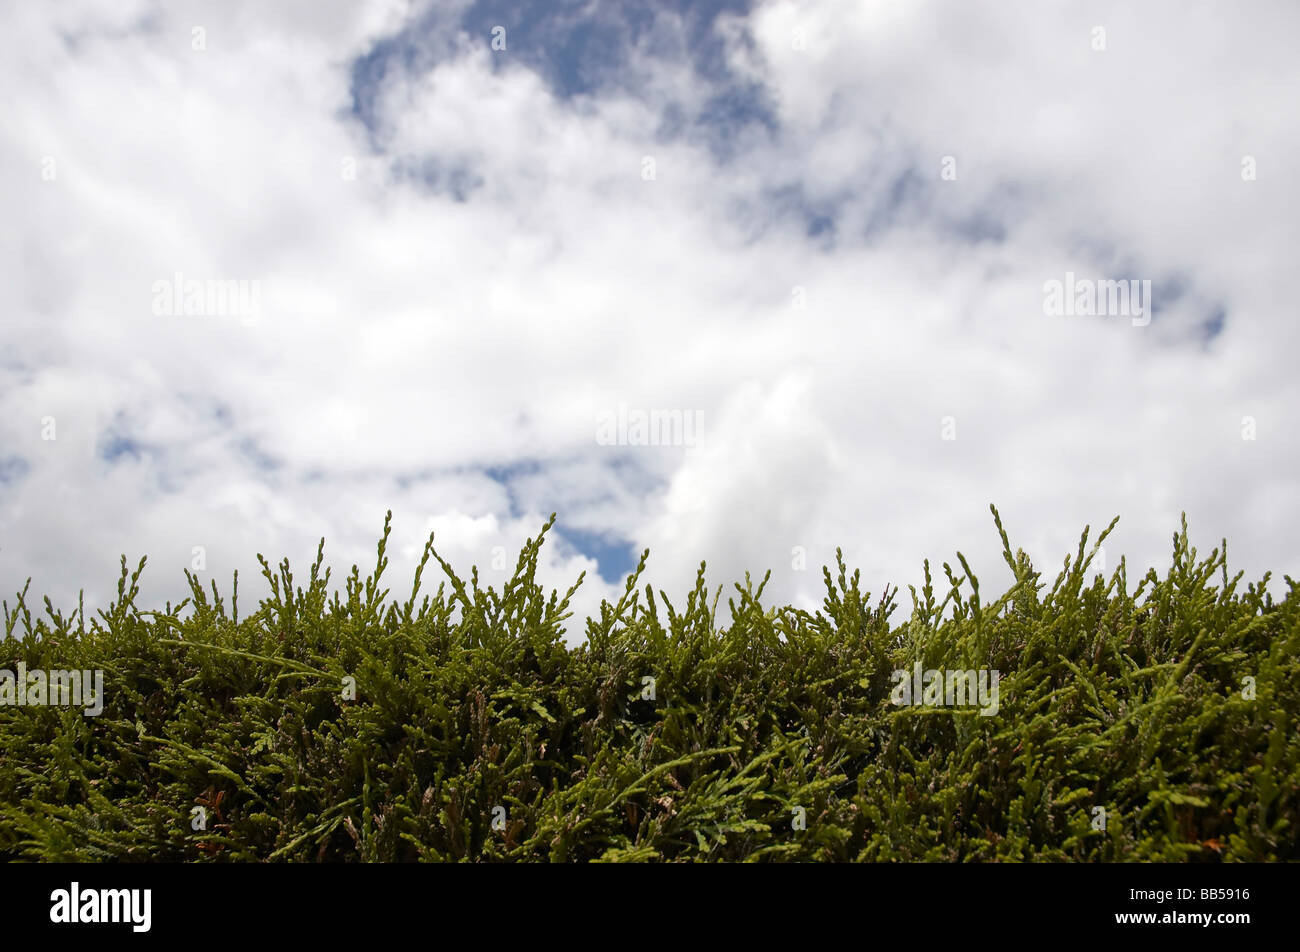 A leylandii hedge against a cloudy sky Stock Photo